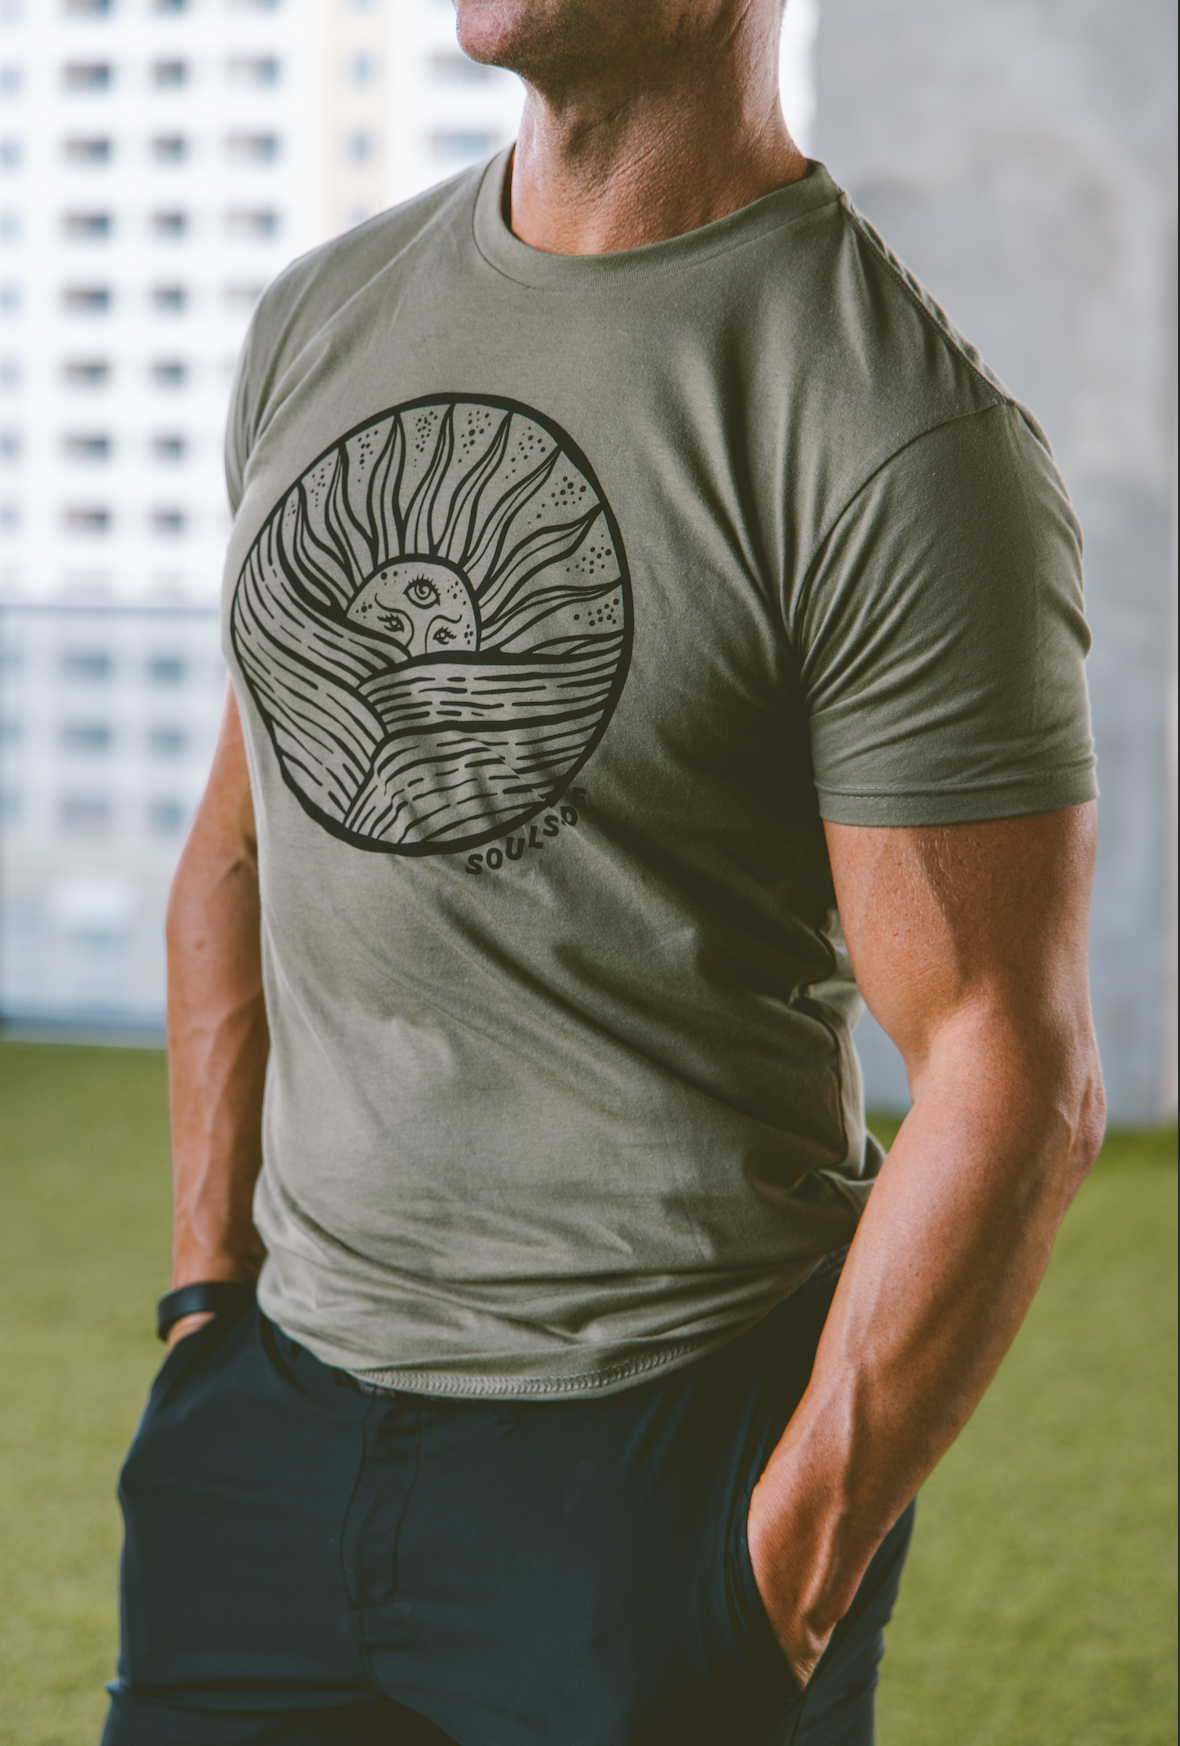 Image of athletic man wearing Soulside men's begin again t-shirt, a premium t-shirt made with original art depicting a hand drawn sun.